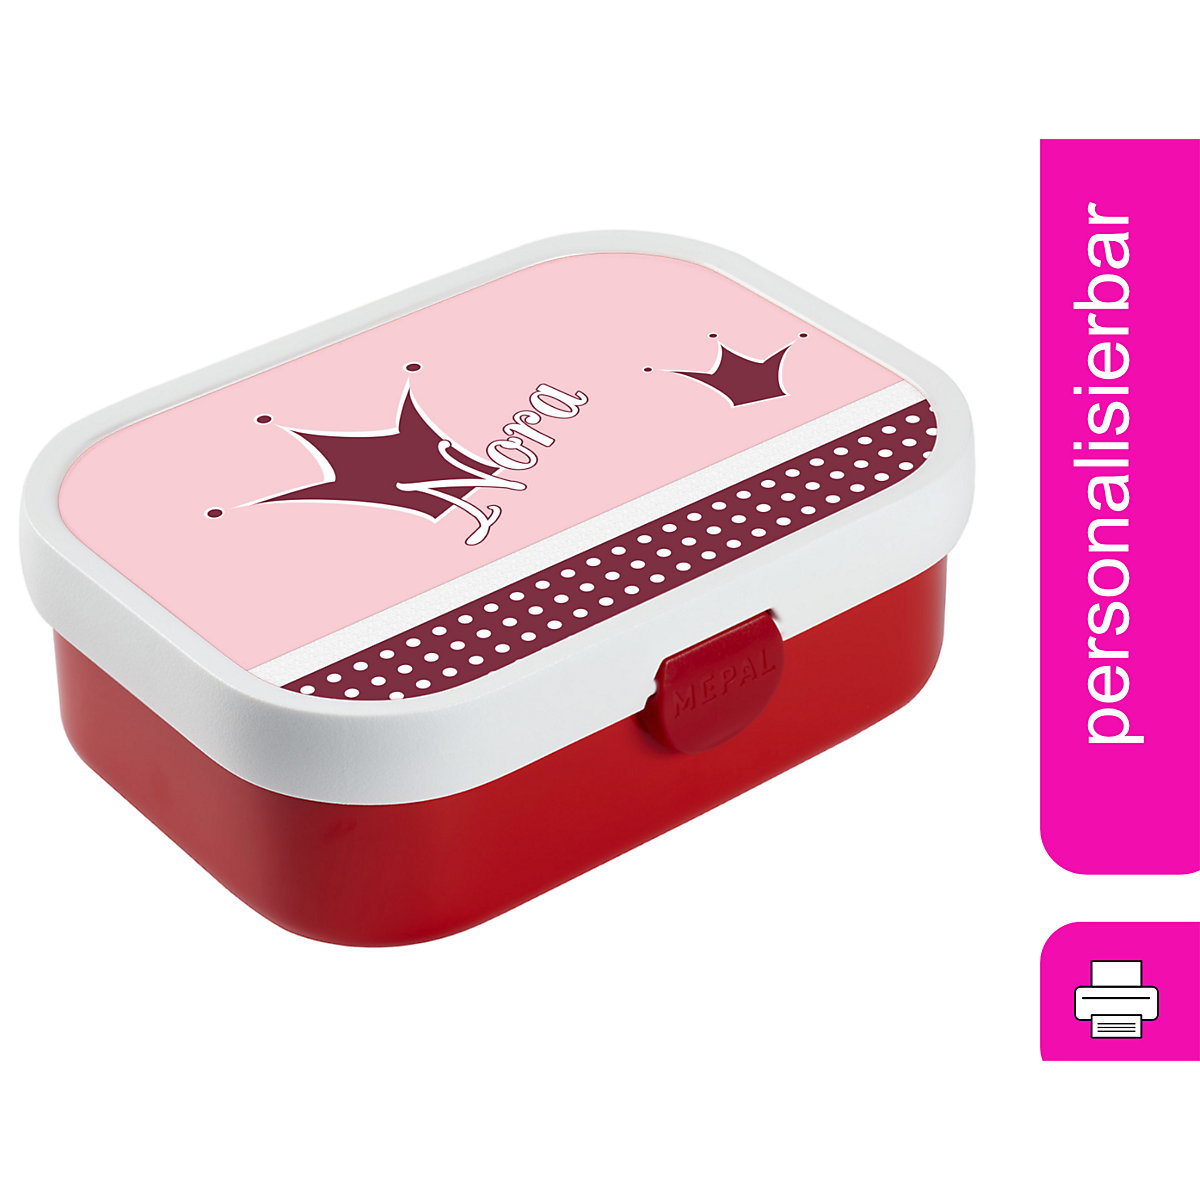 CreaDesign Brotdose Mepal Kinder mit Fächern mit Name personalisiert Prinz / Prinzessin rosa RI11146